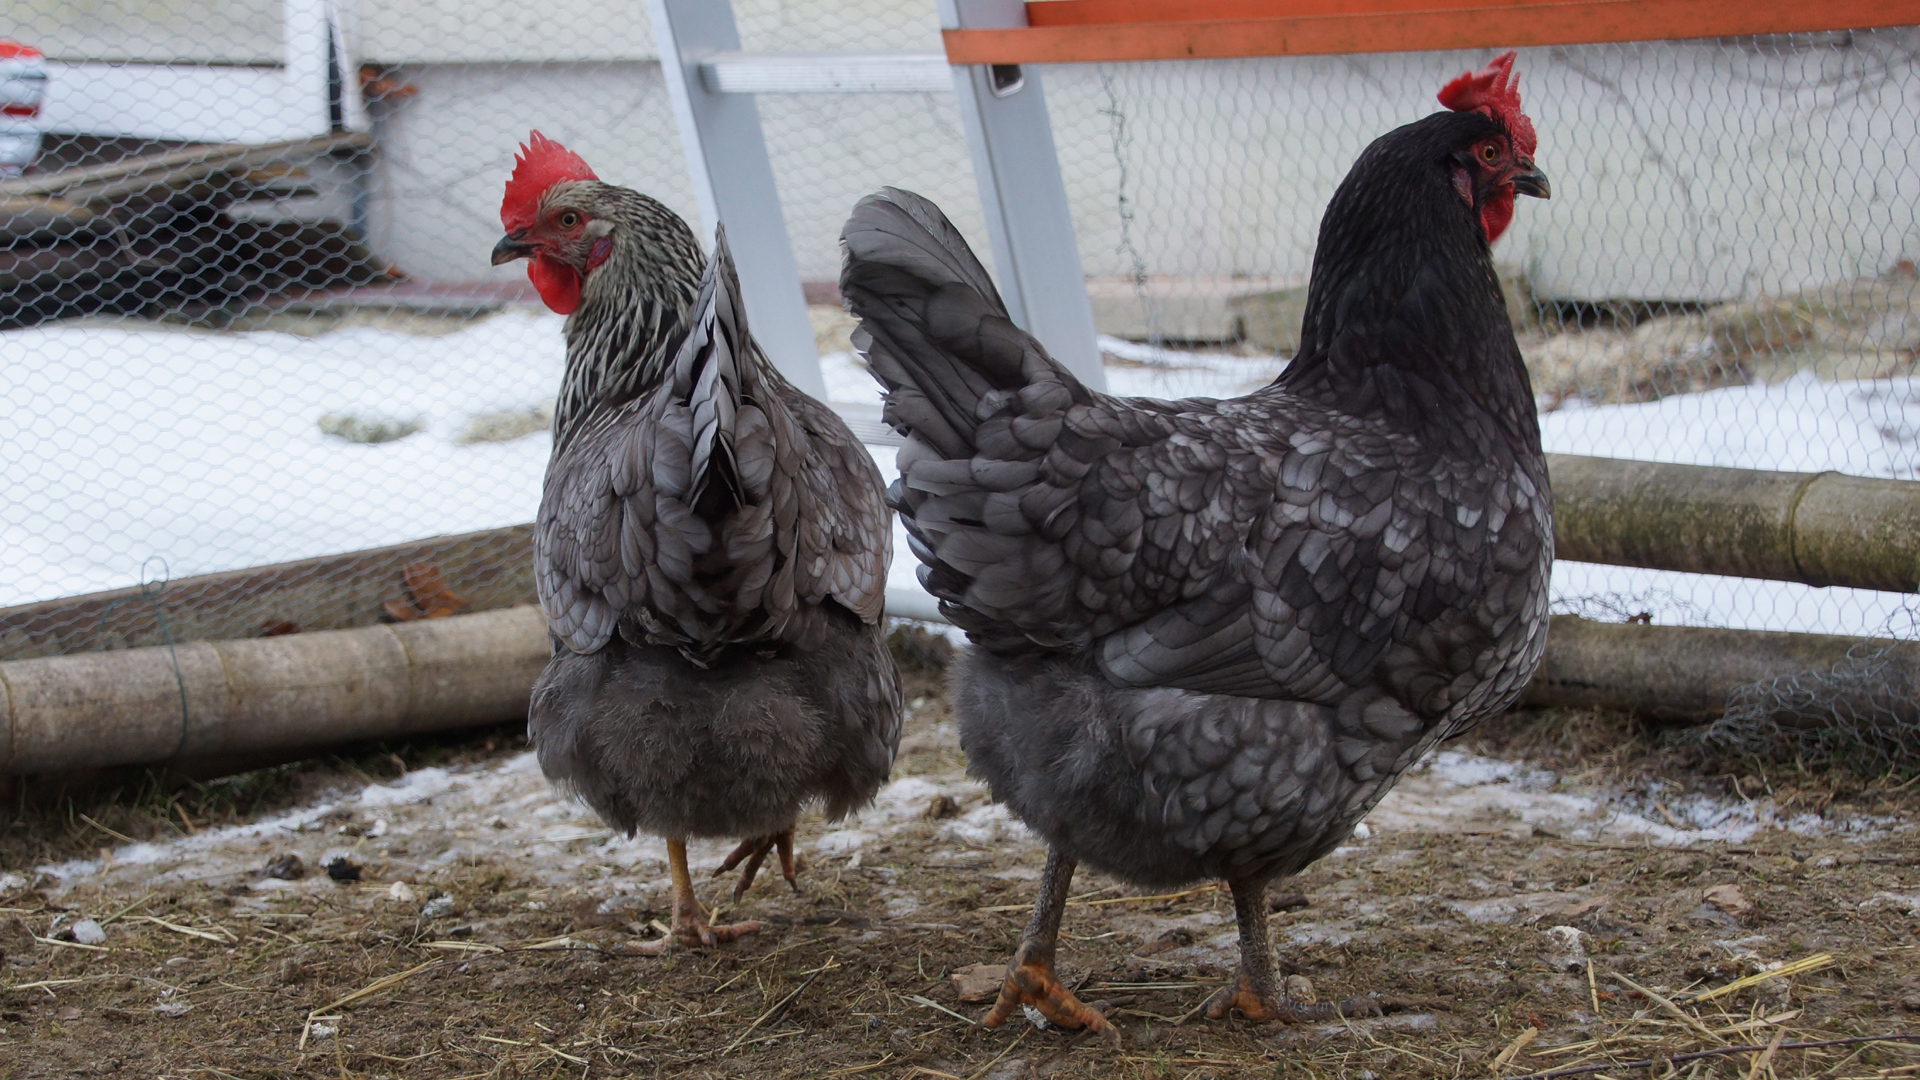 Fotostrecke Hühner 17: Hühnergehege